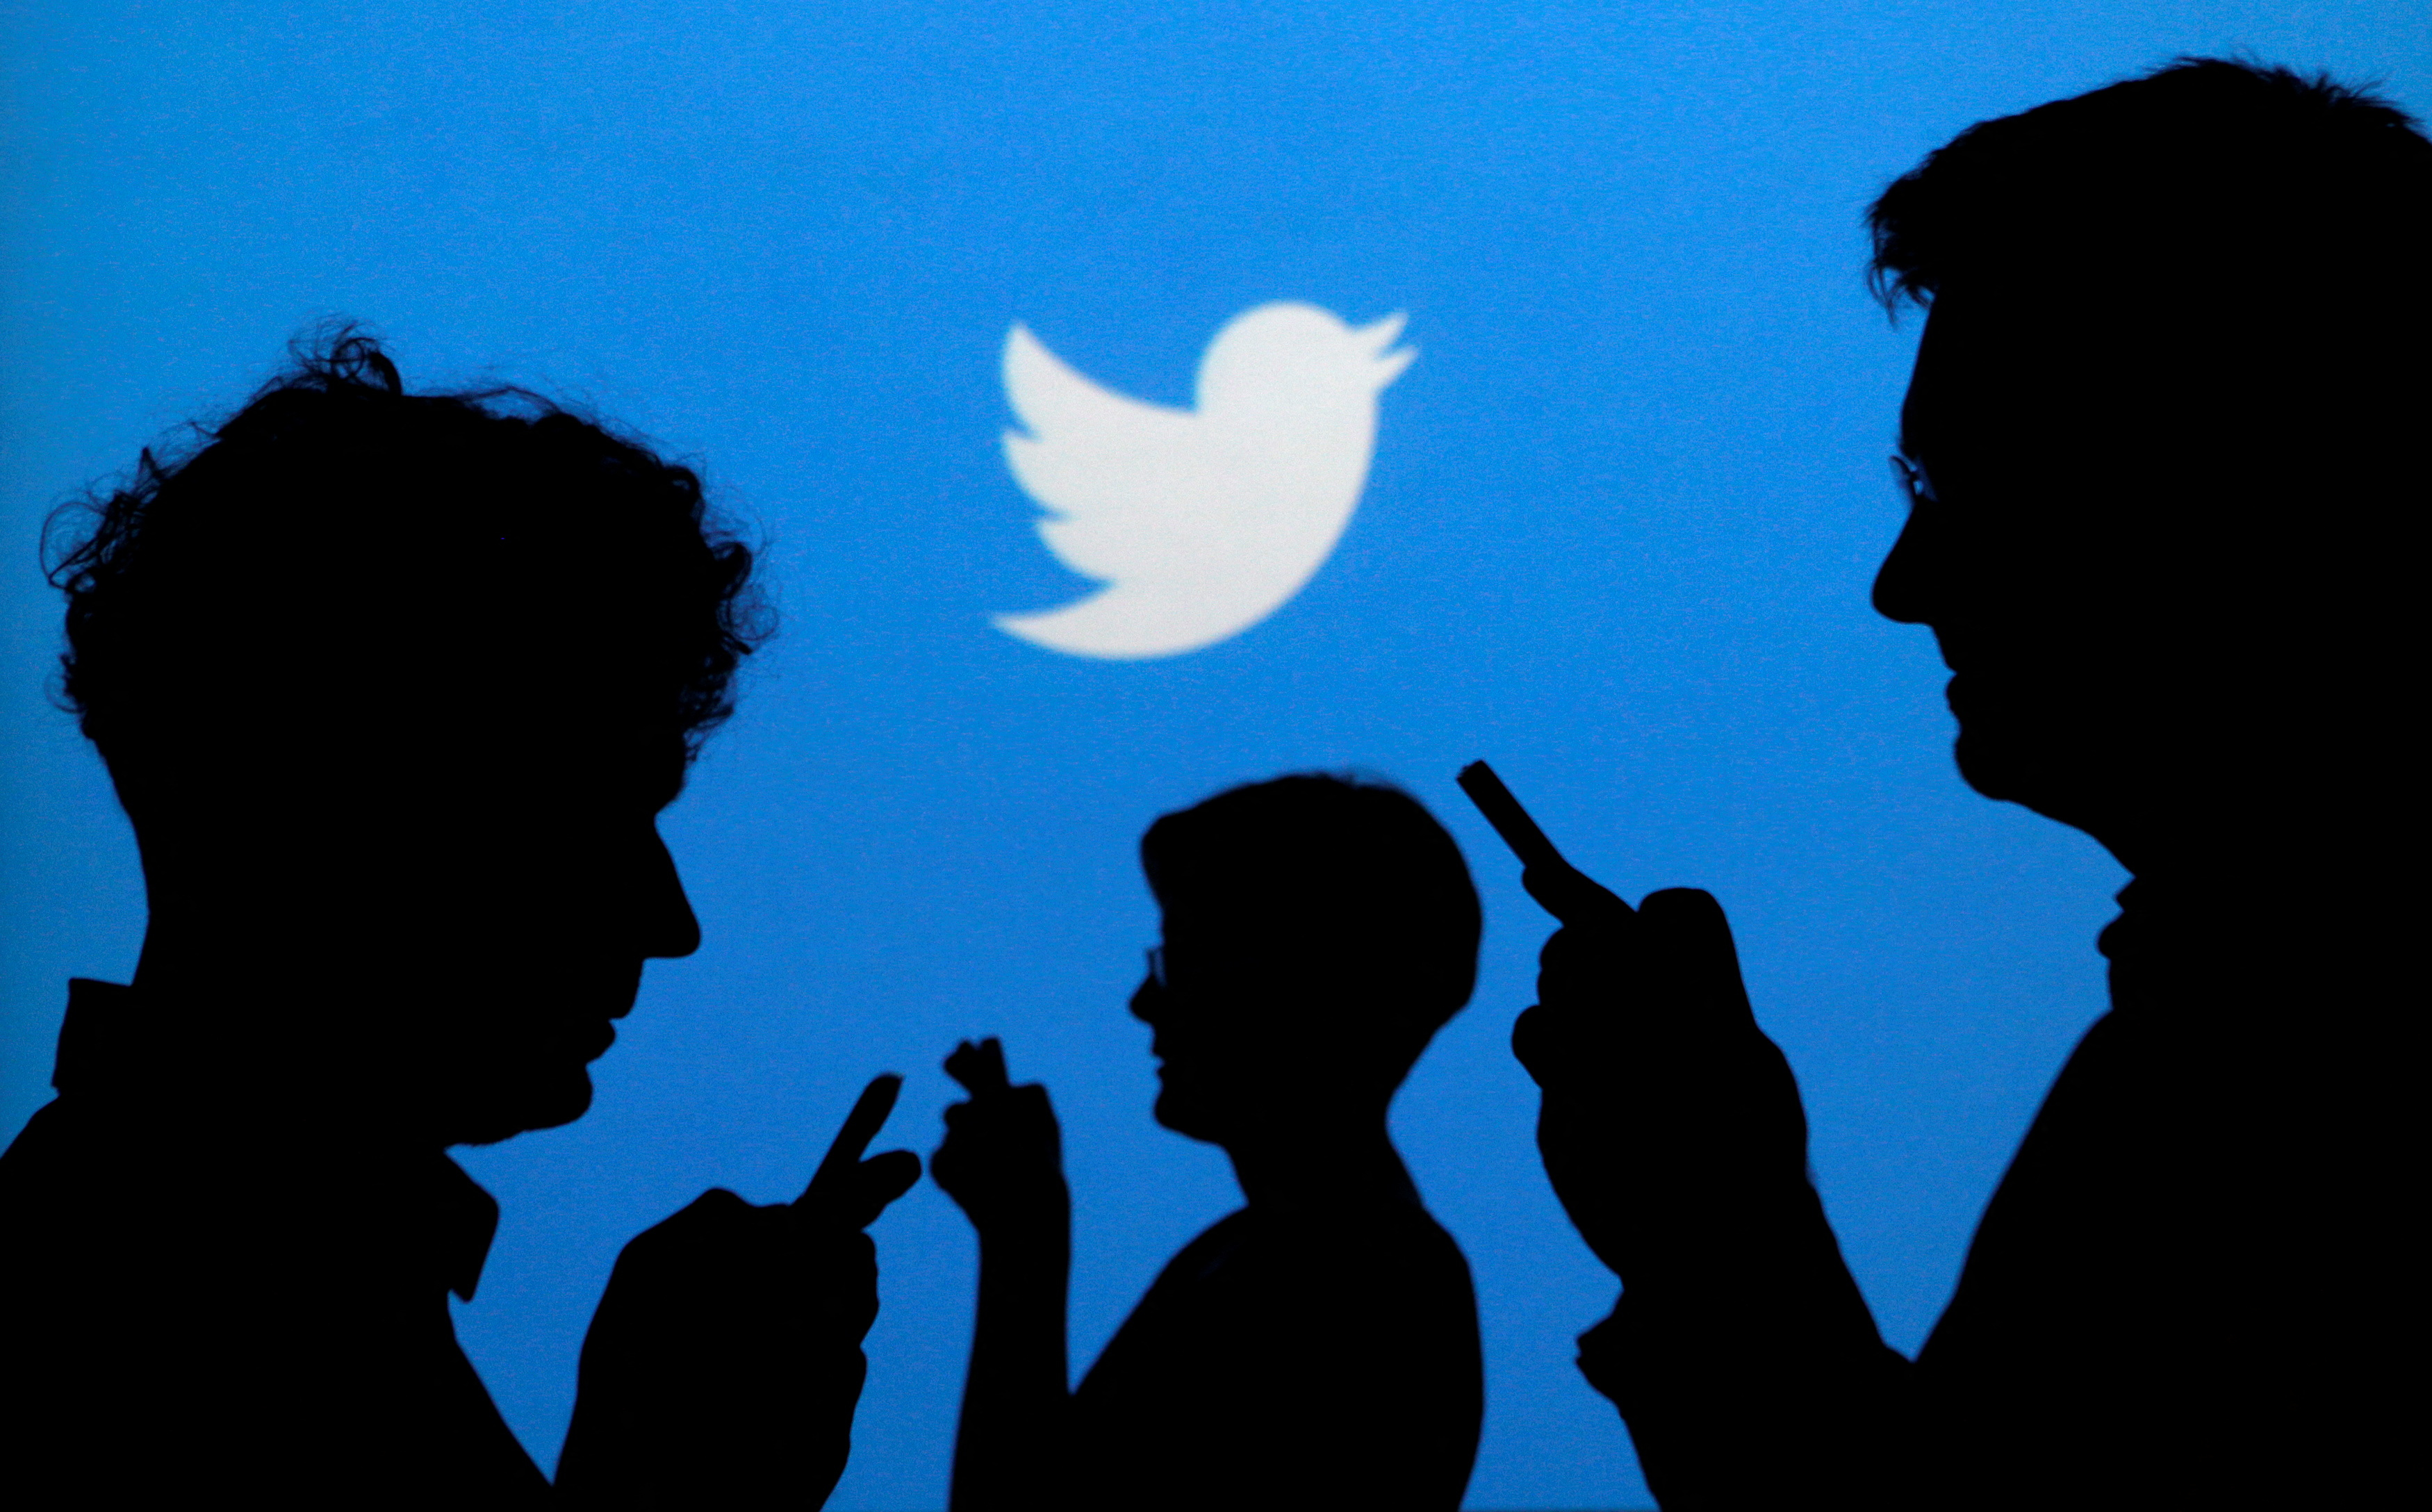 Twitter trends emerged in 2008. (REUTERS/Kacper Pempel/File Photo)